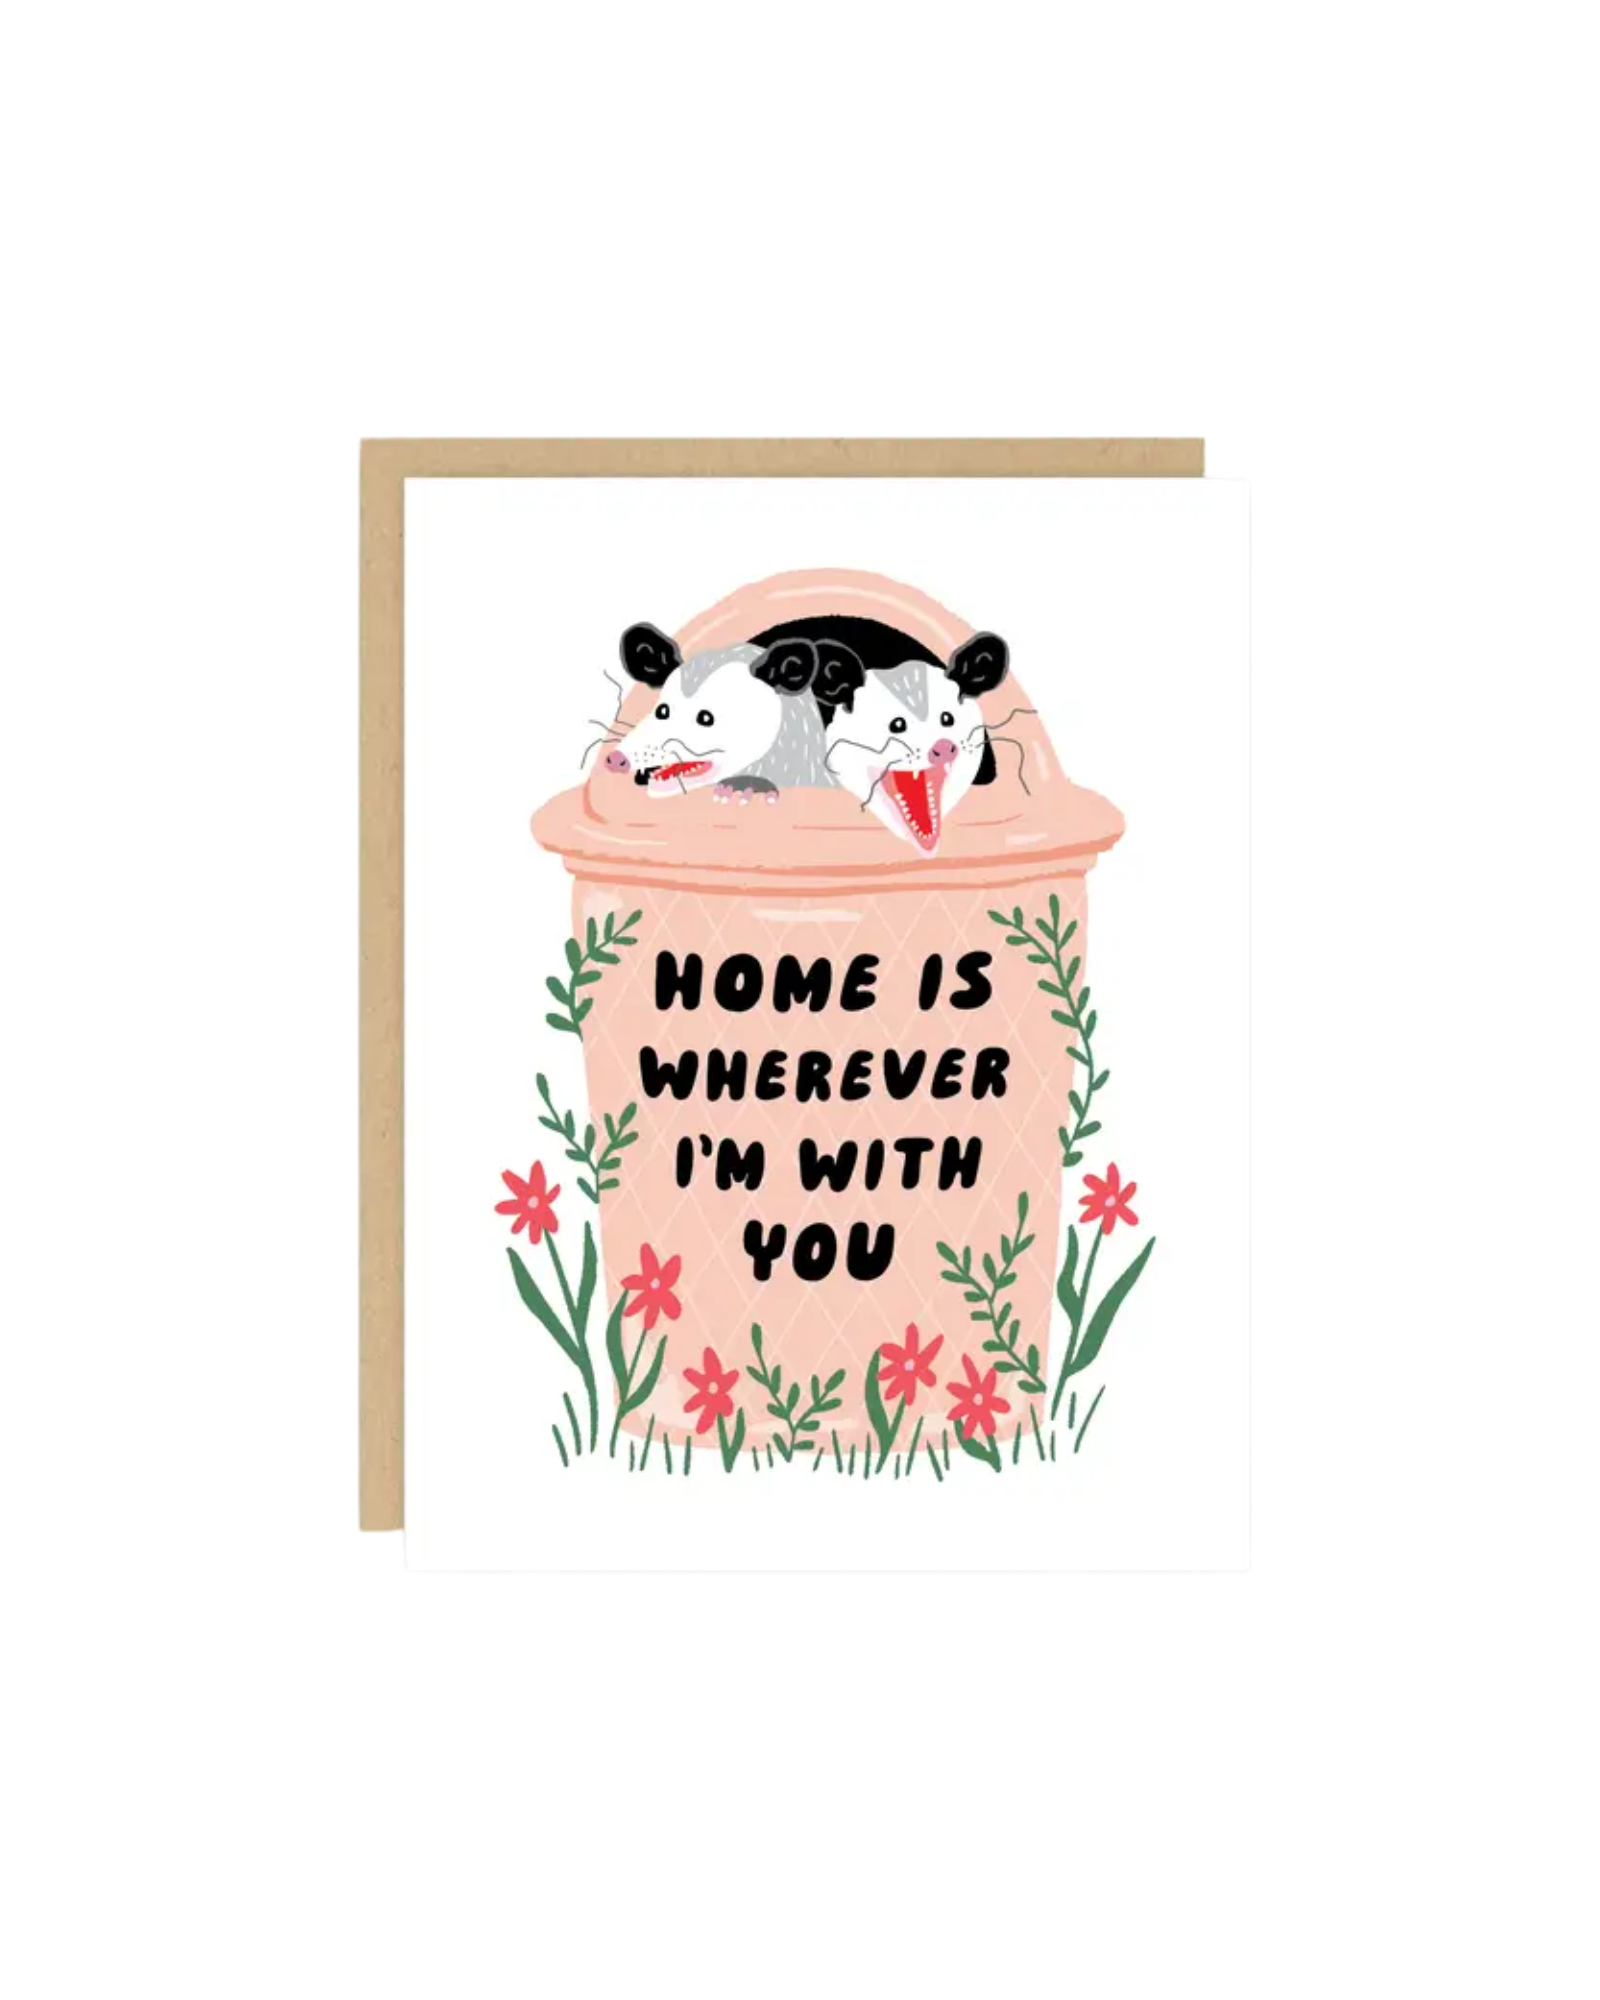 Possum Home Greeting Card